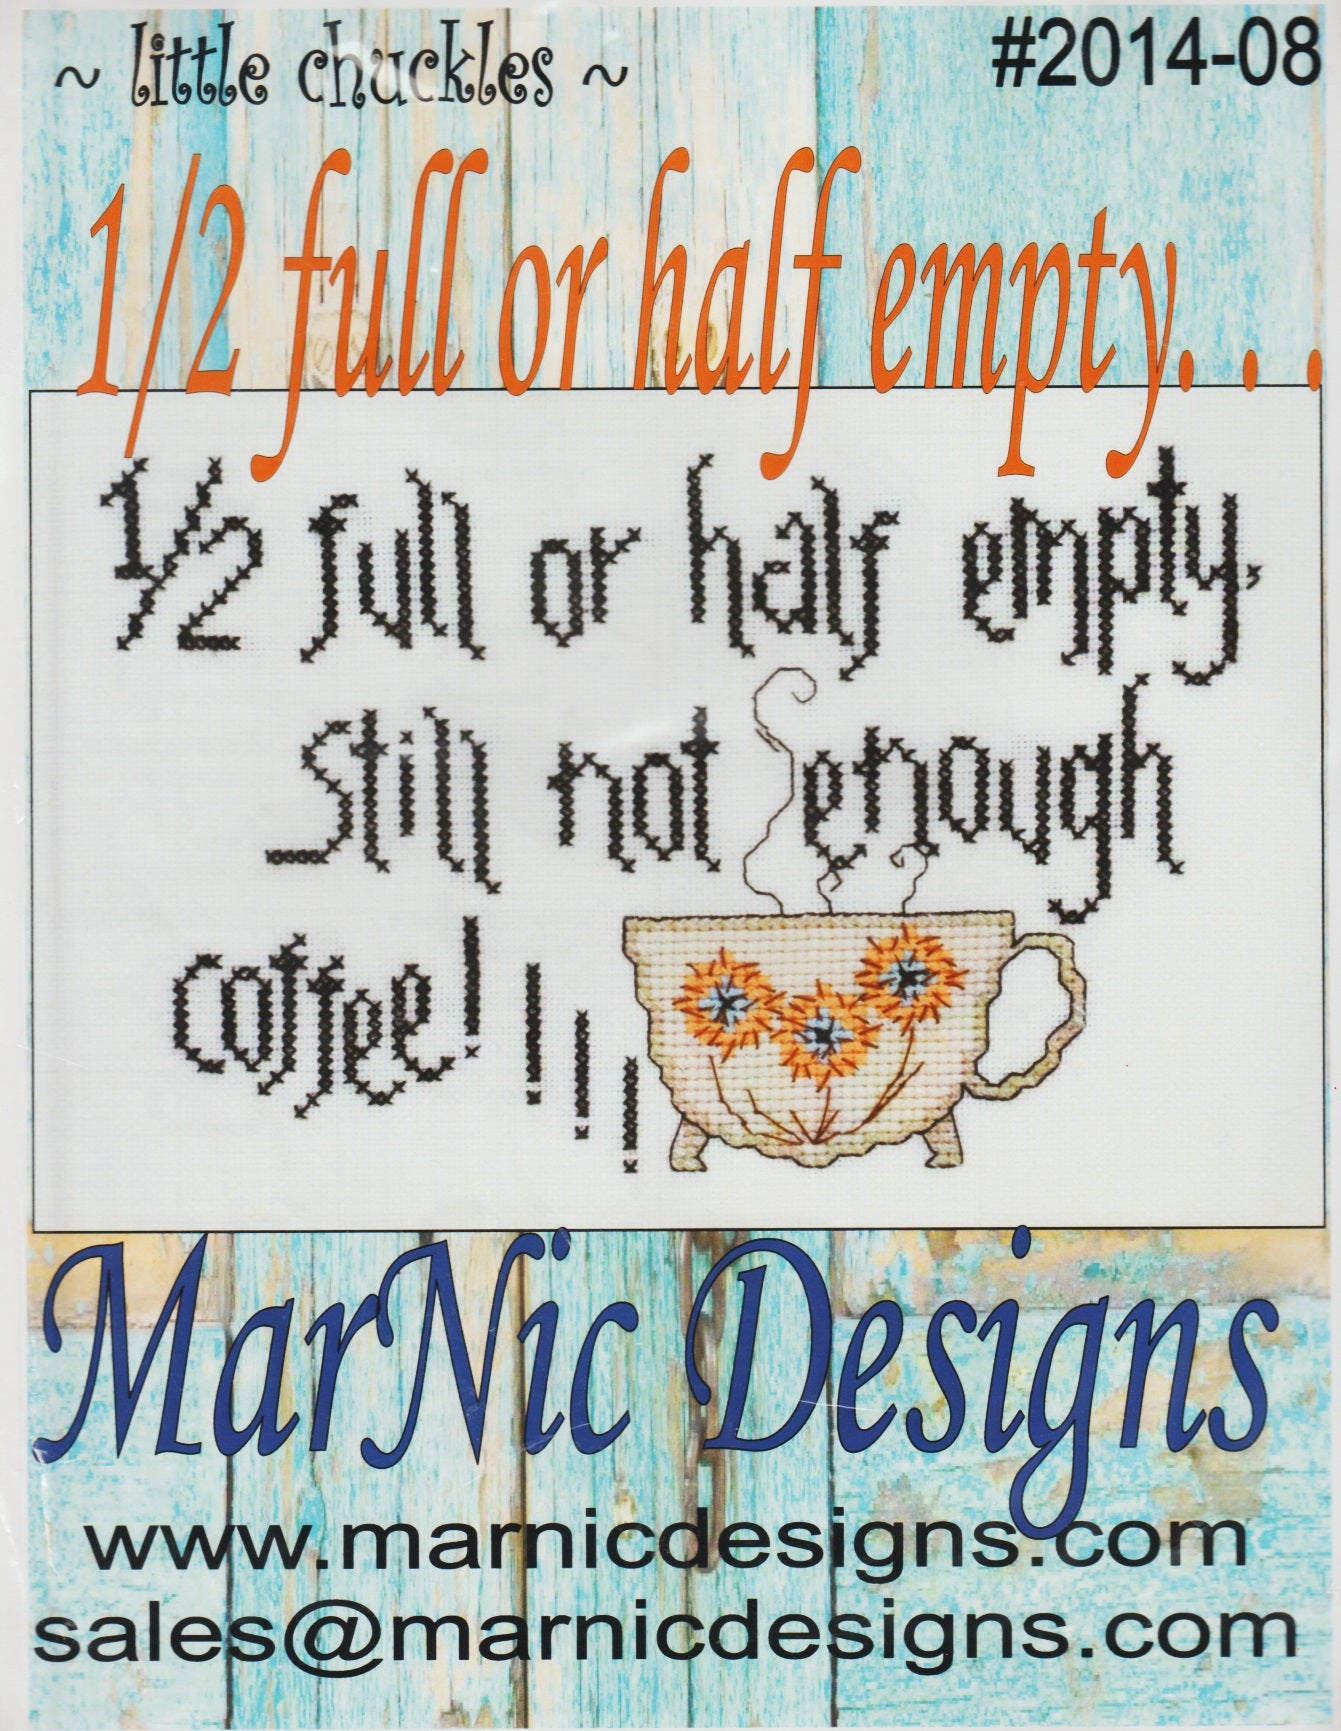 MarNic 1/2 Full or Half Empty 2014-08 coffee cross stitch pattern